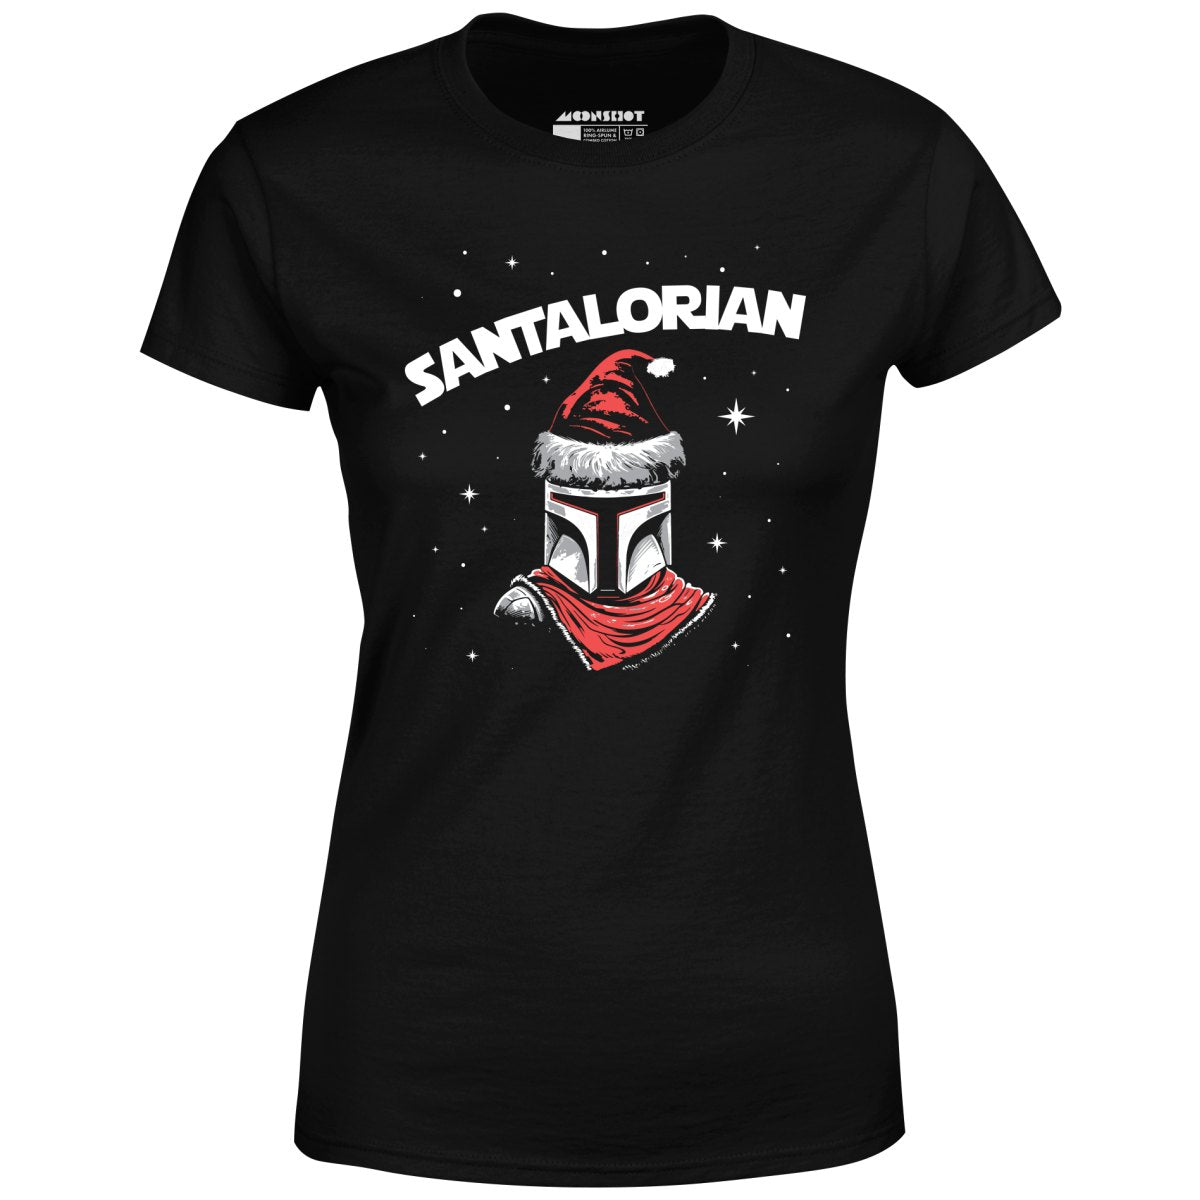 Santalorian - Women's T-Shirt